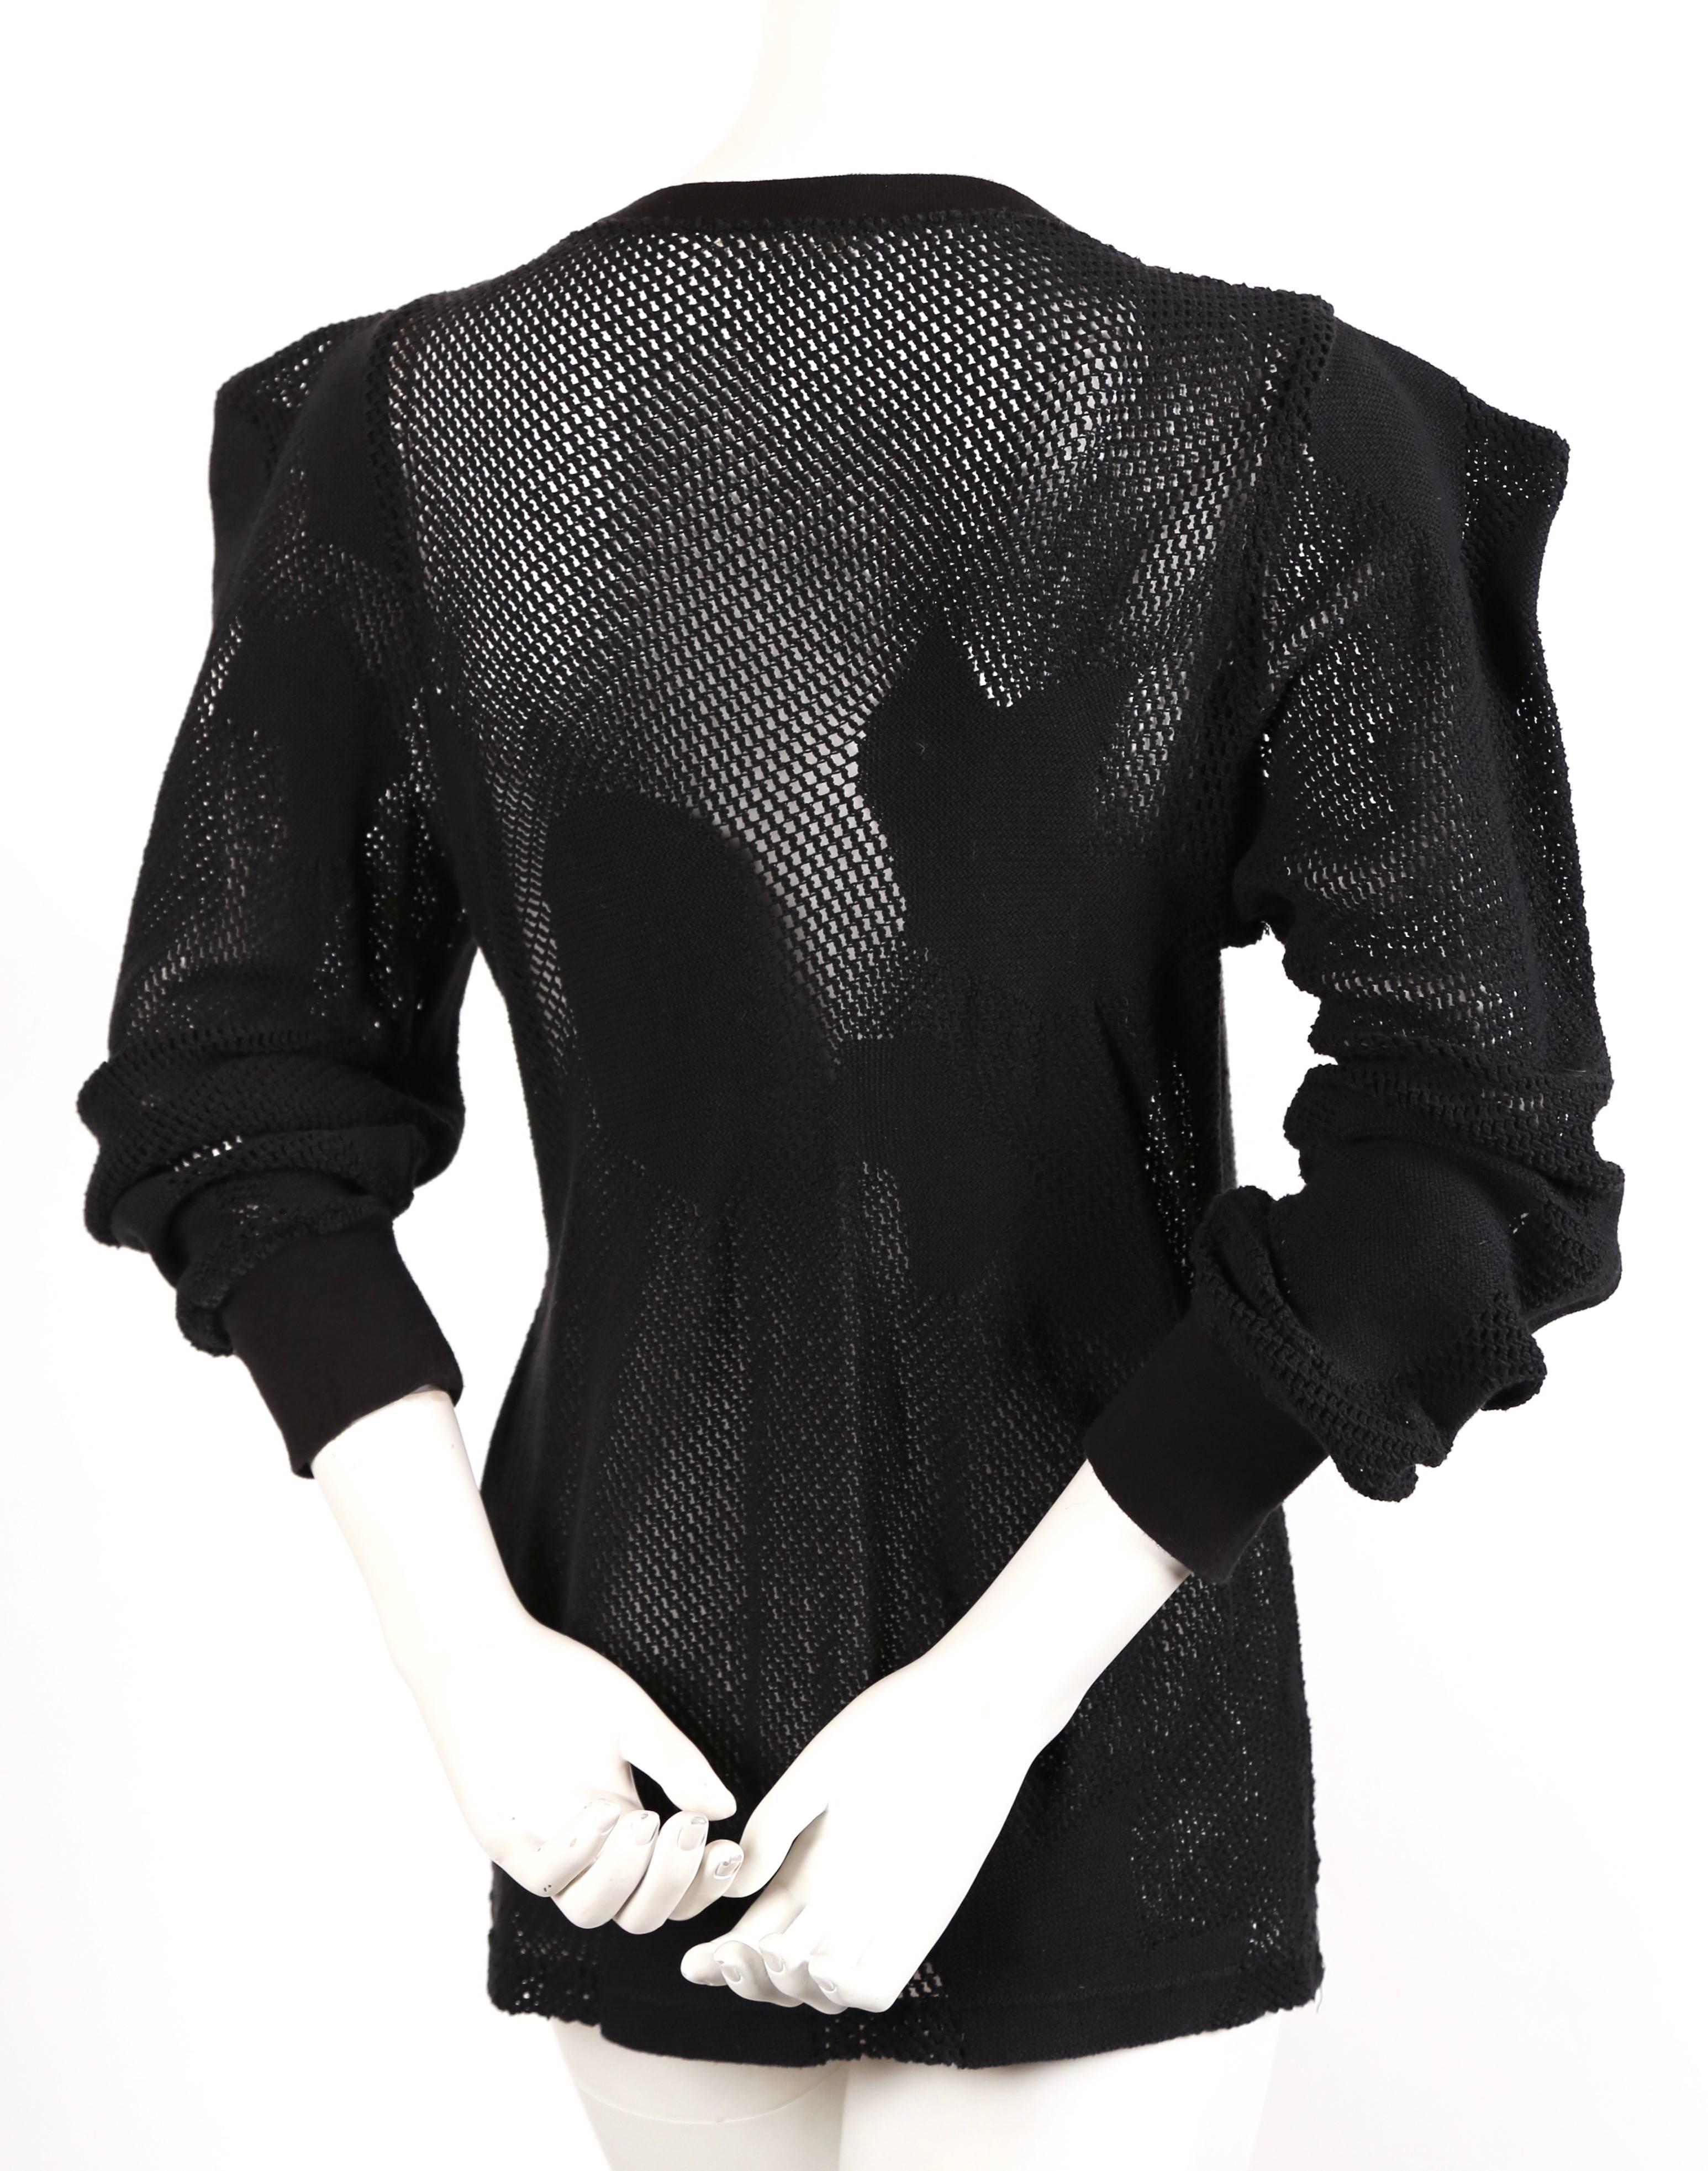 Women's or Men's 1980's COMME DES GARCONS black knit top with peaked shoulders